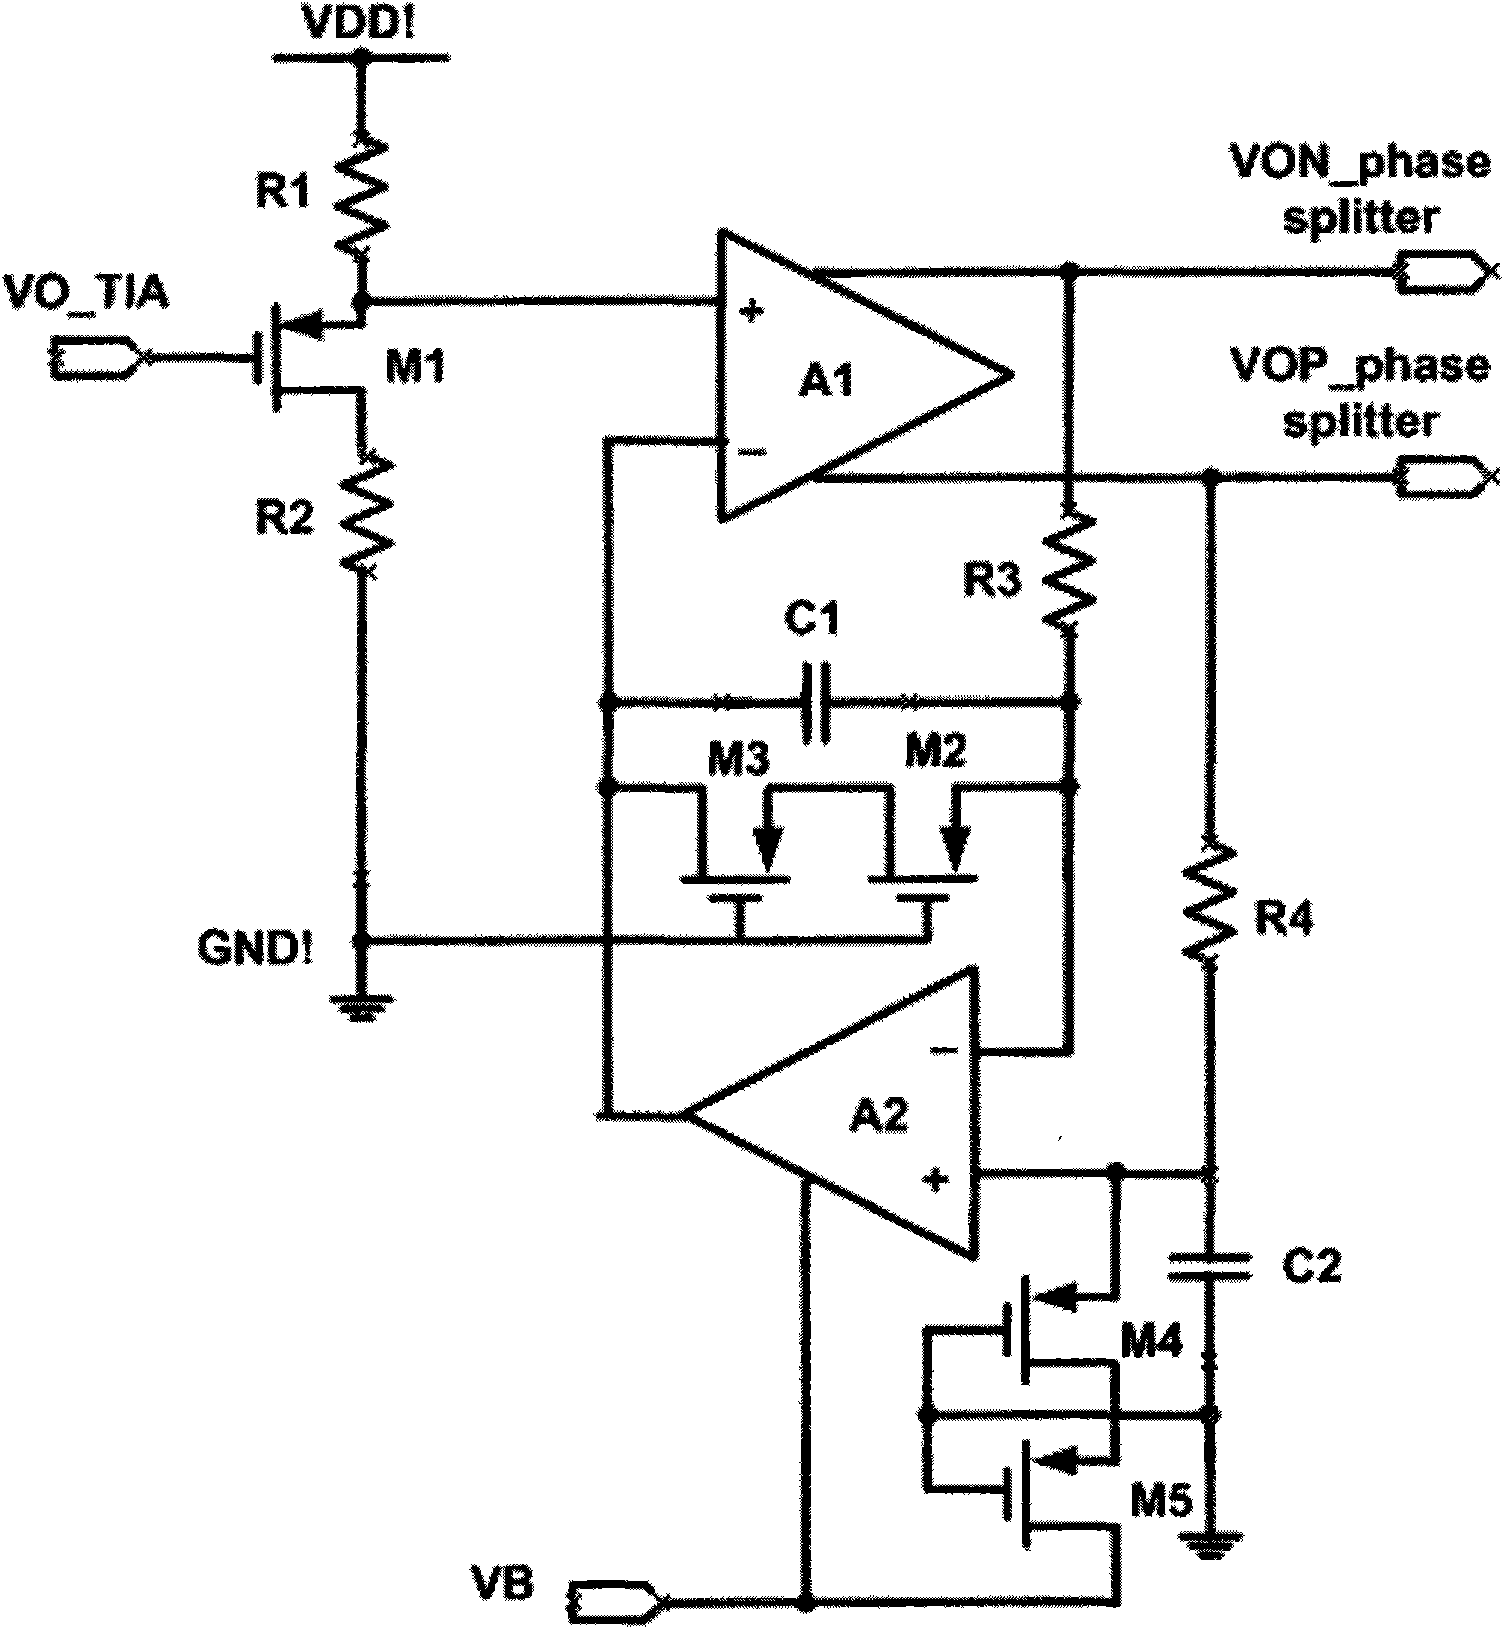 High speed phase splitting circuit